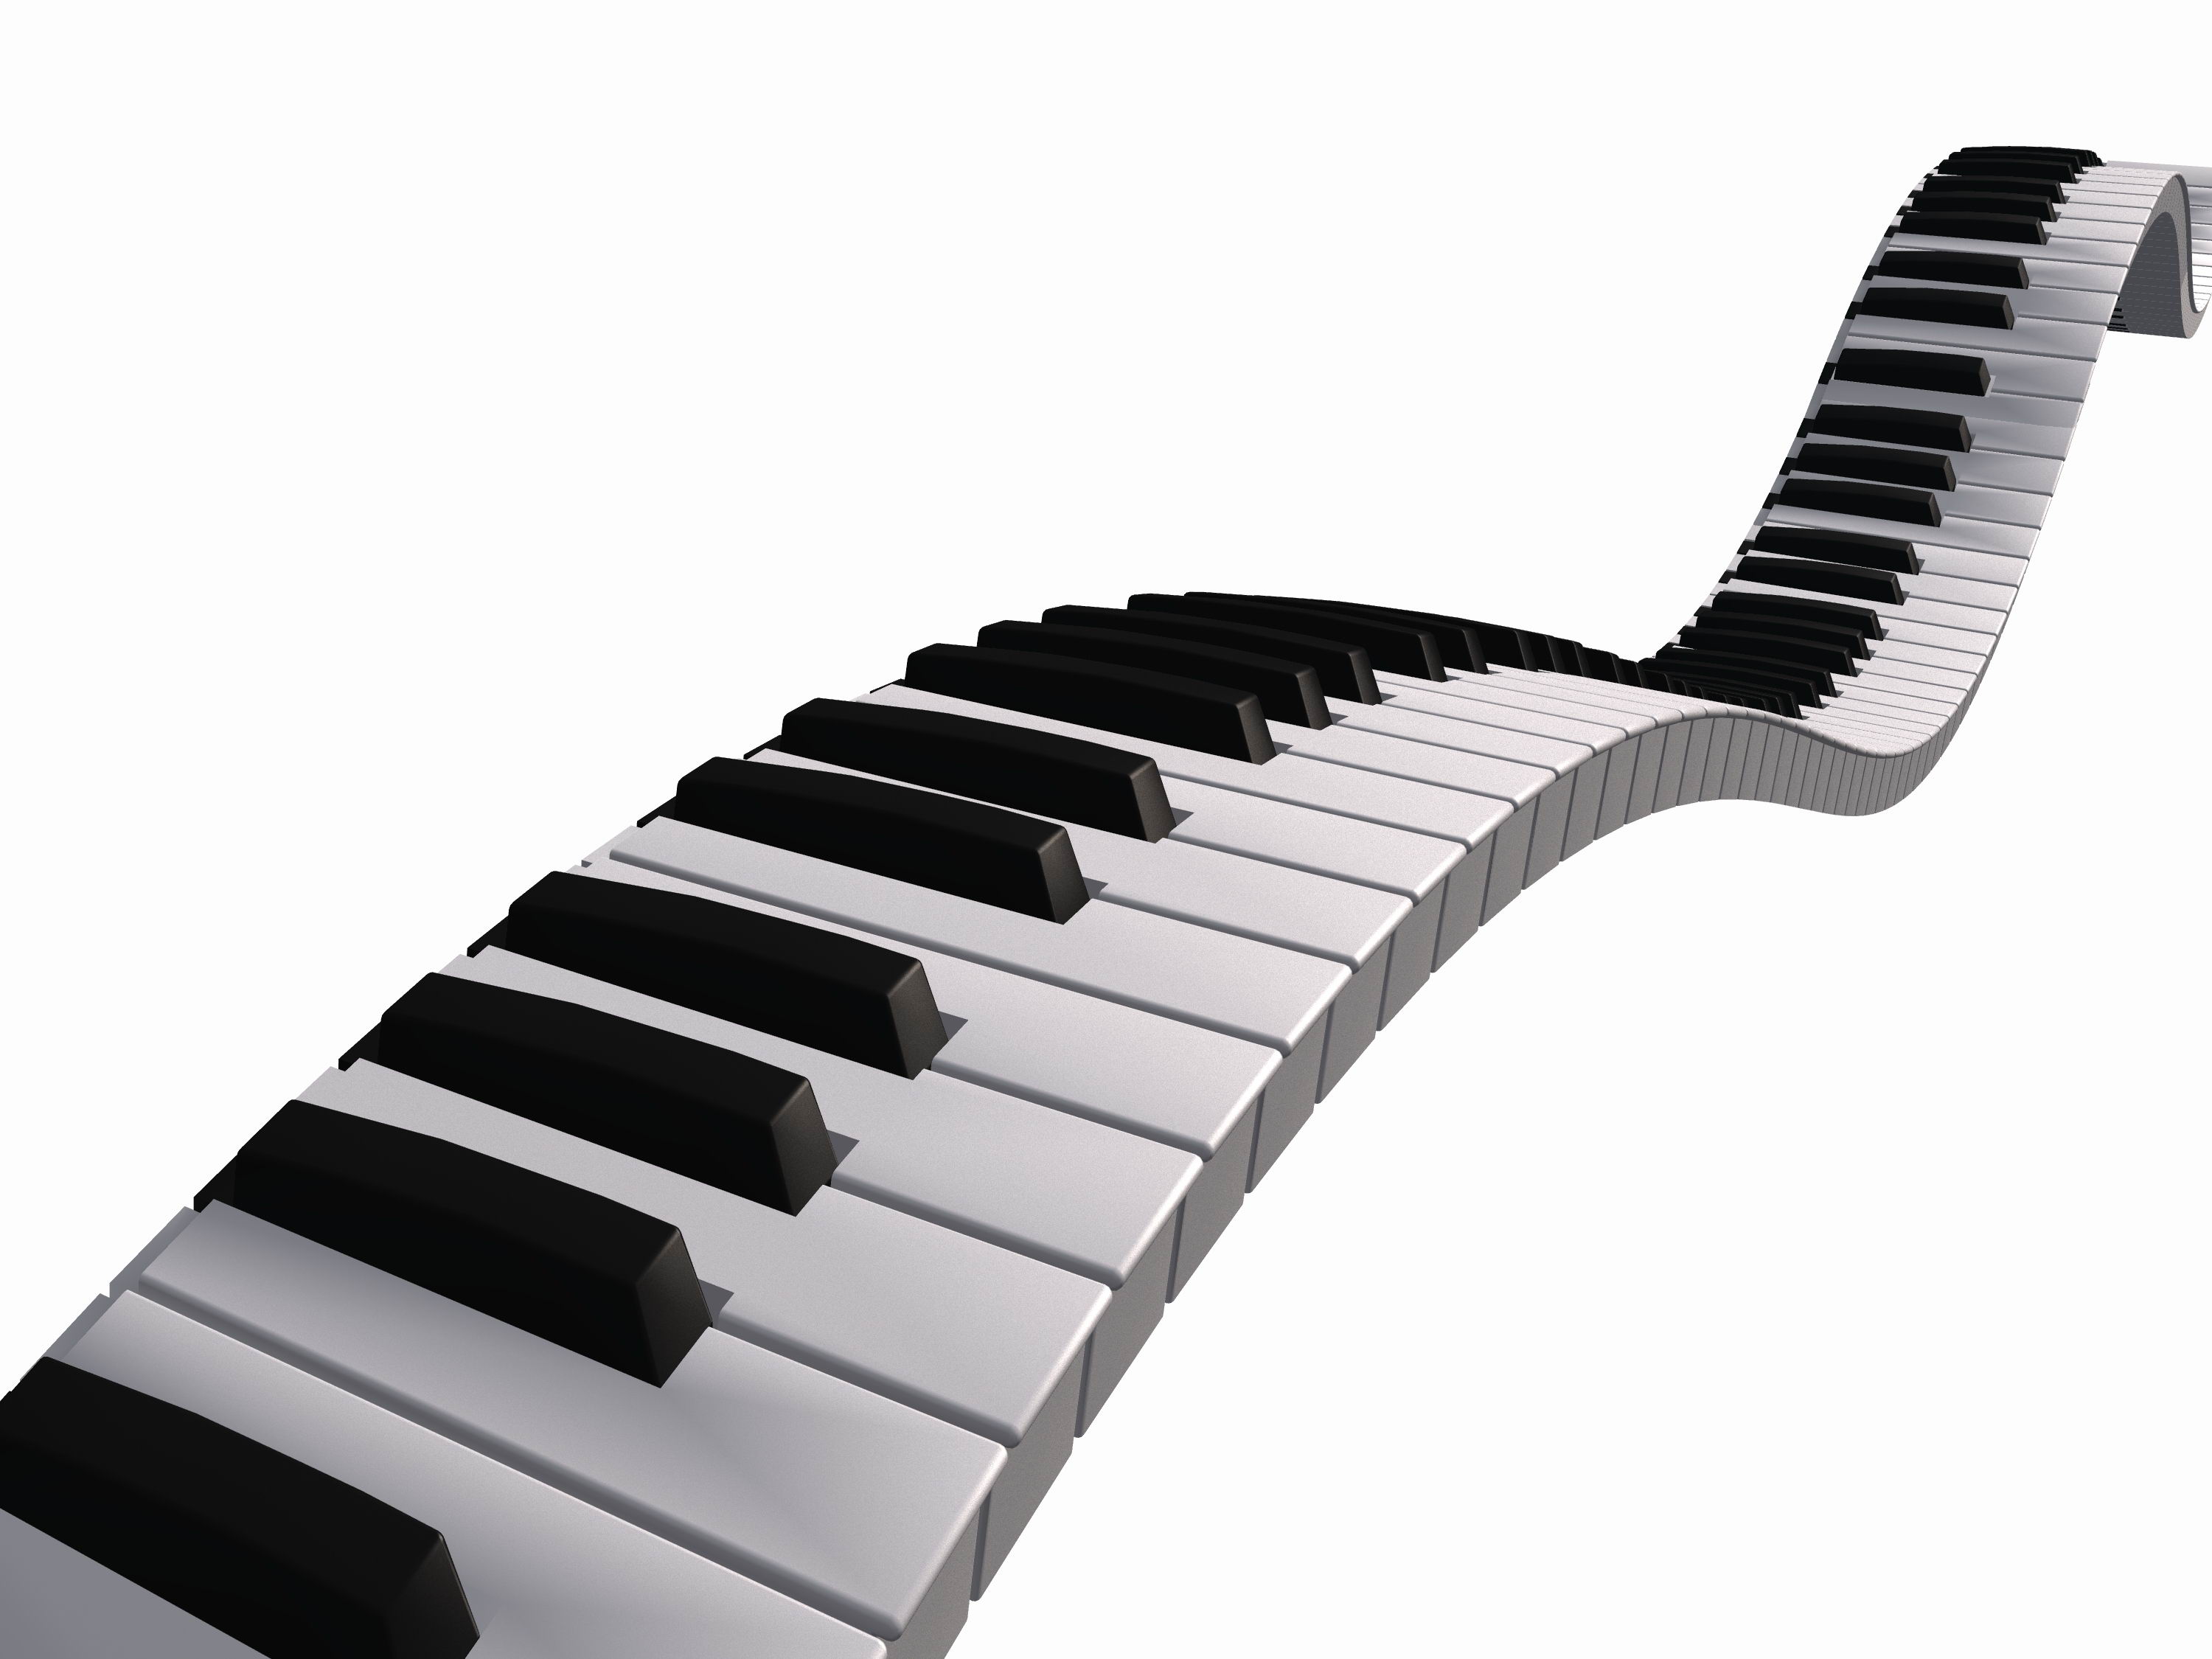 Piano Keyboard Clip Art - Clipart library